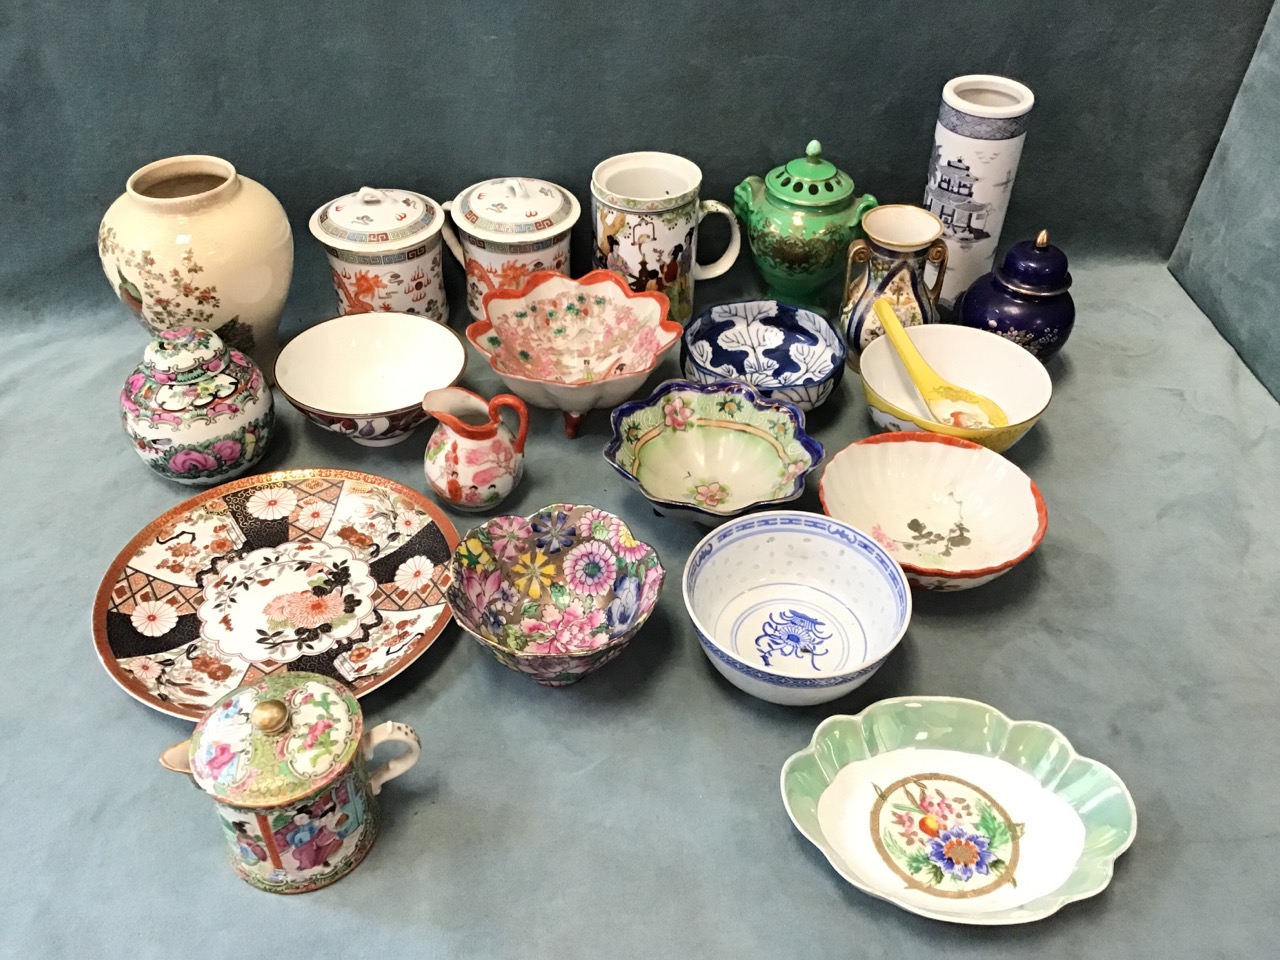 Miscellaneous oriental ceramics - a C19th Canton mandarin pattern covered jug, mugs, vases, a